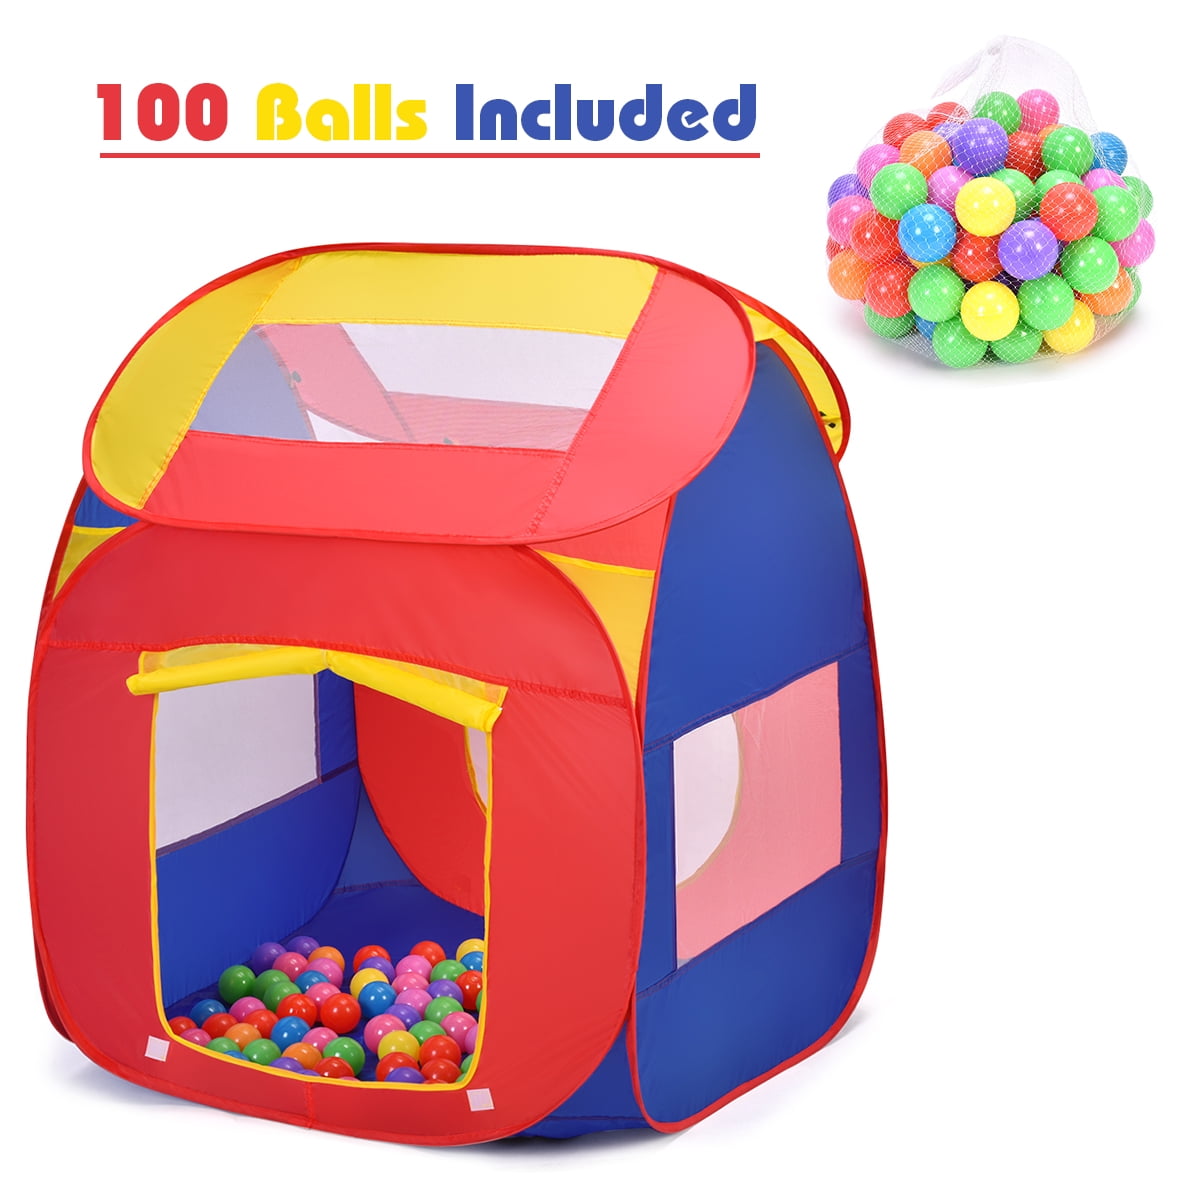 Kids Outdoor Indoor Princess Play Tent Playhouse Toddler Toys with 100 Balls 